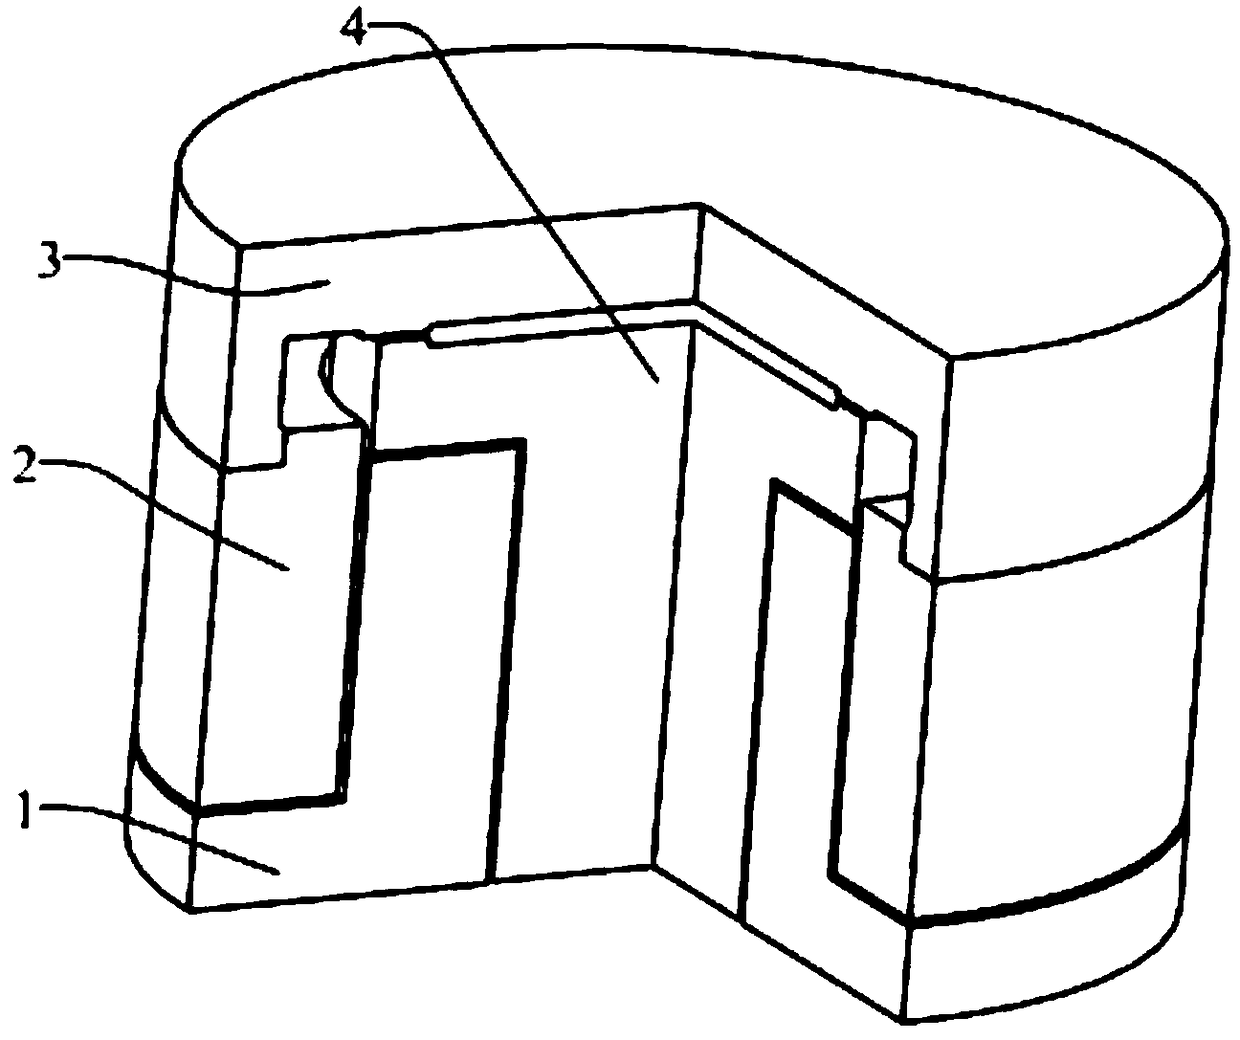 Interlocking structure and interlocking method based on air pressure control